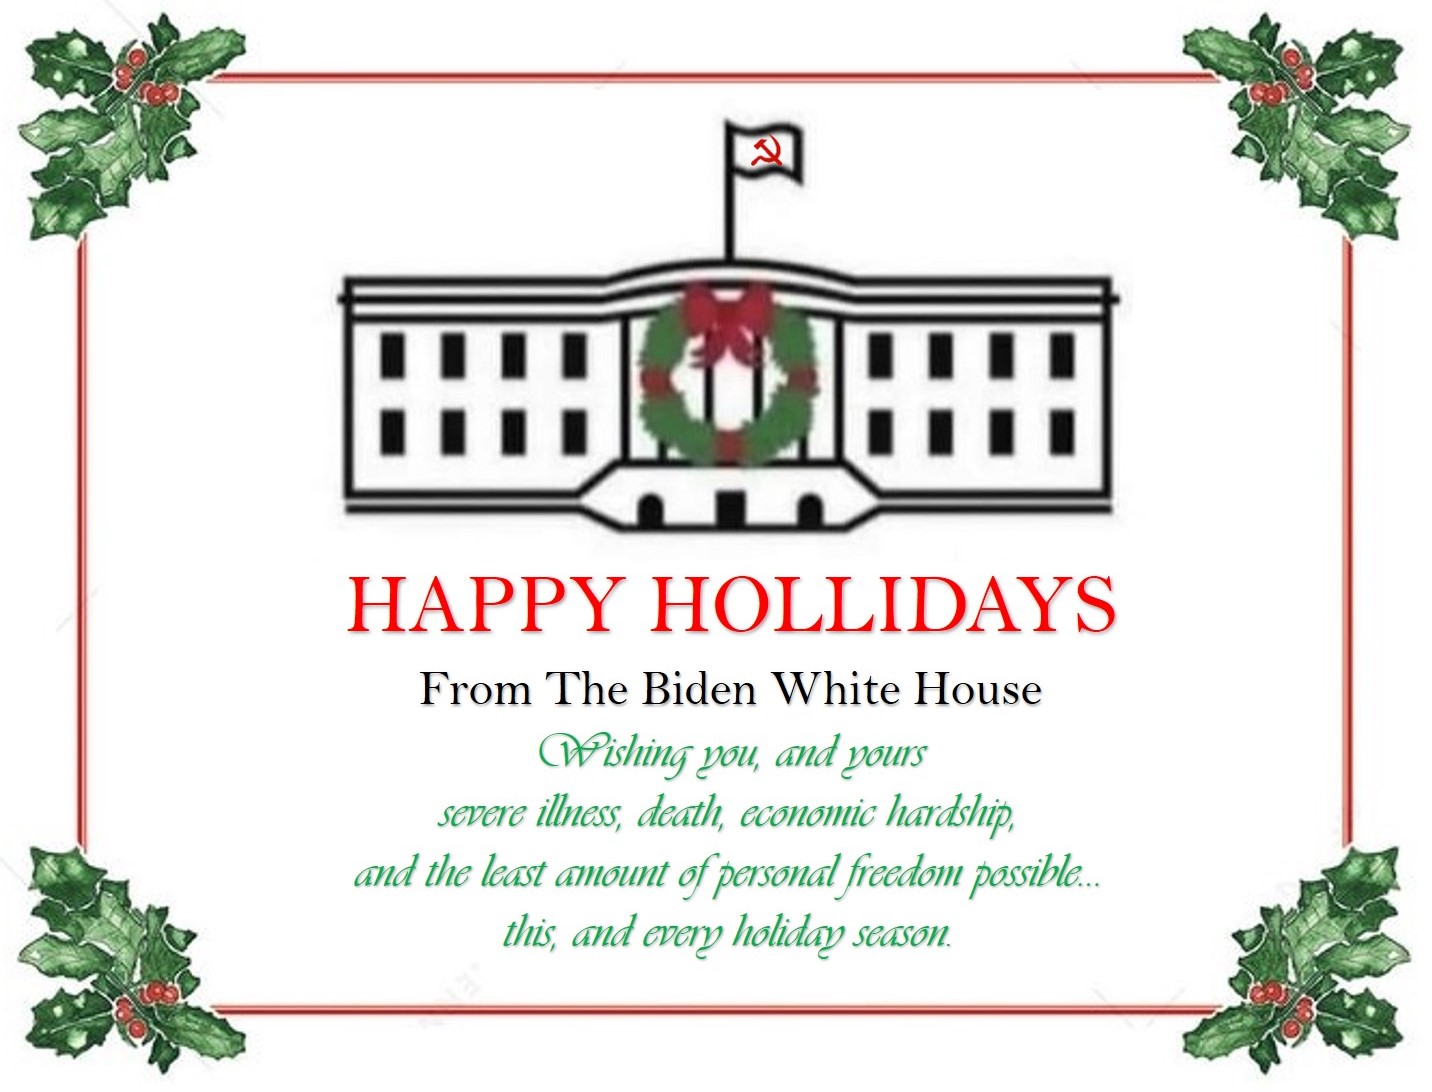 White House holidays.jpg